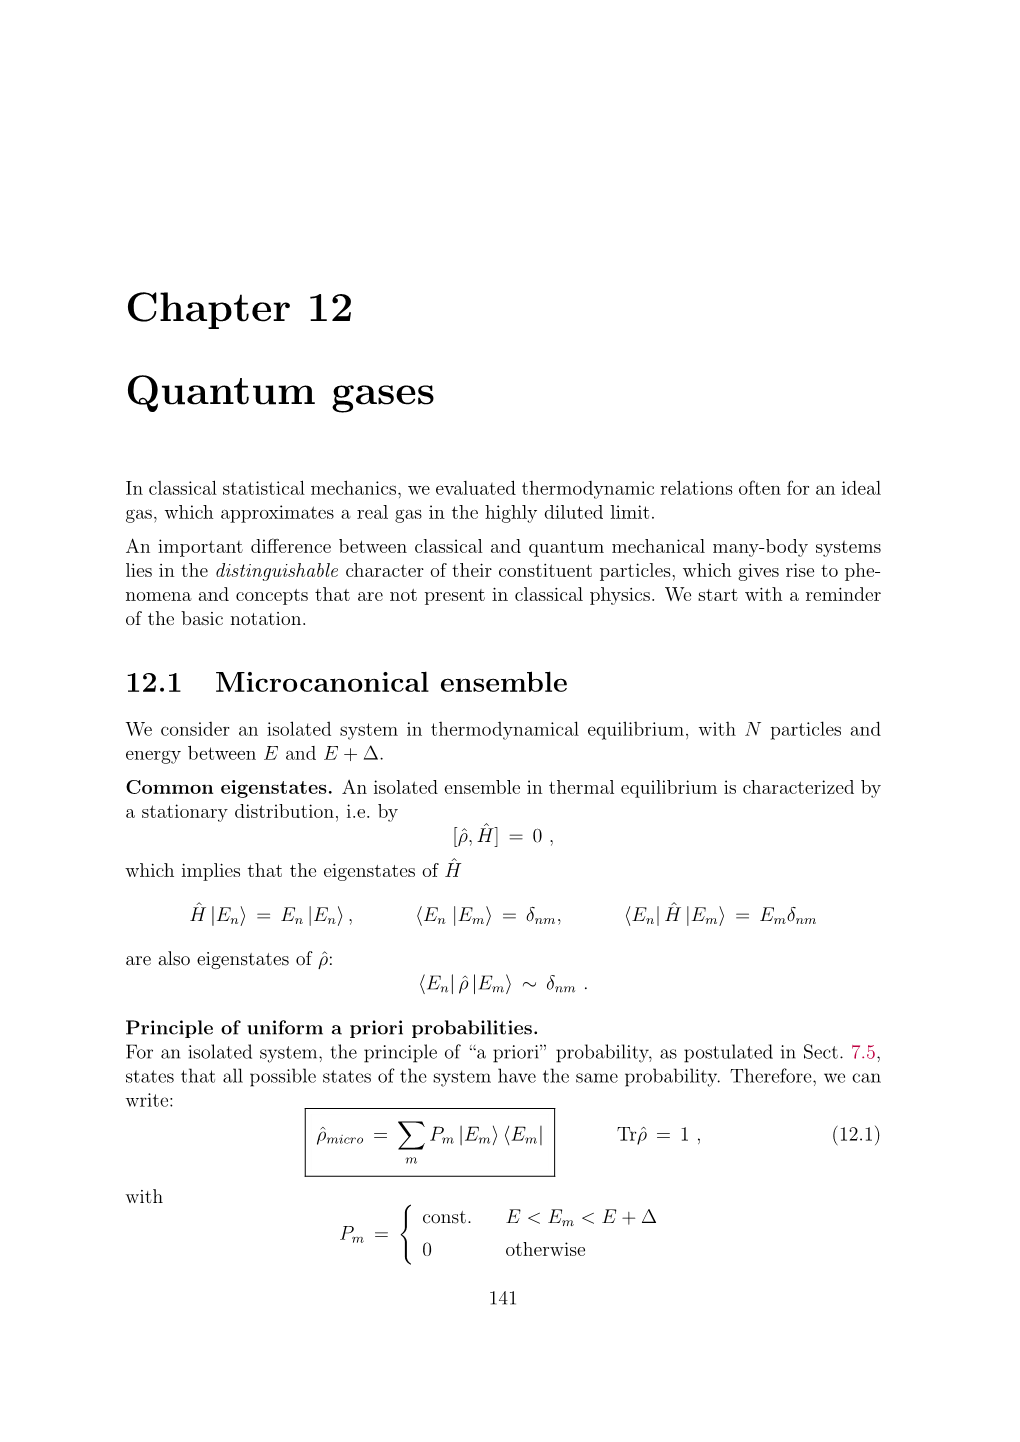 Chapter 12 Quantum Gases